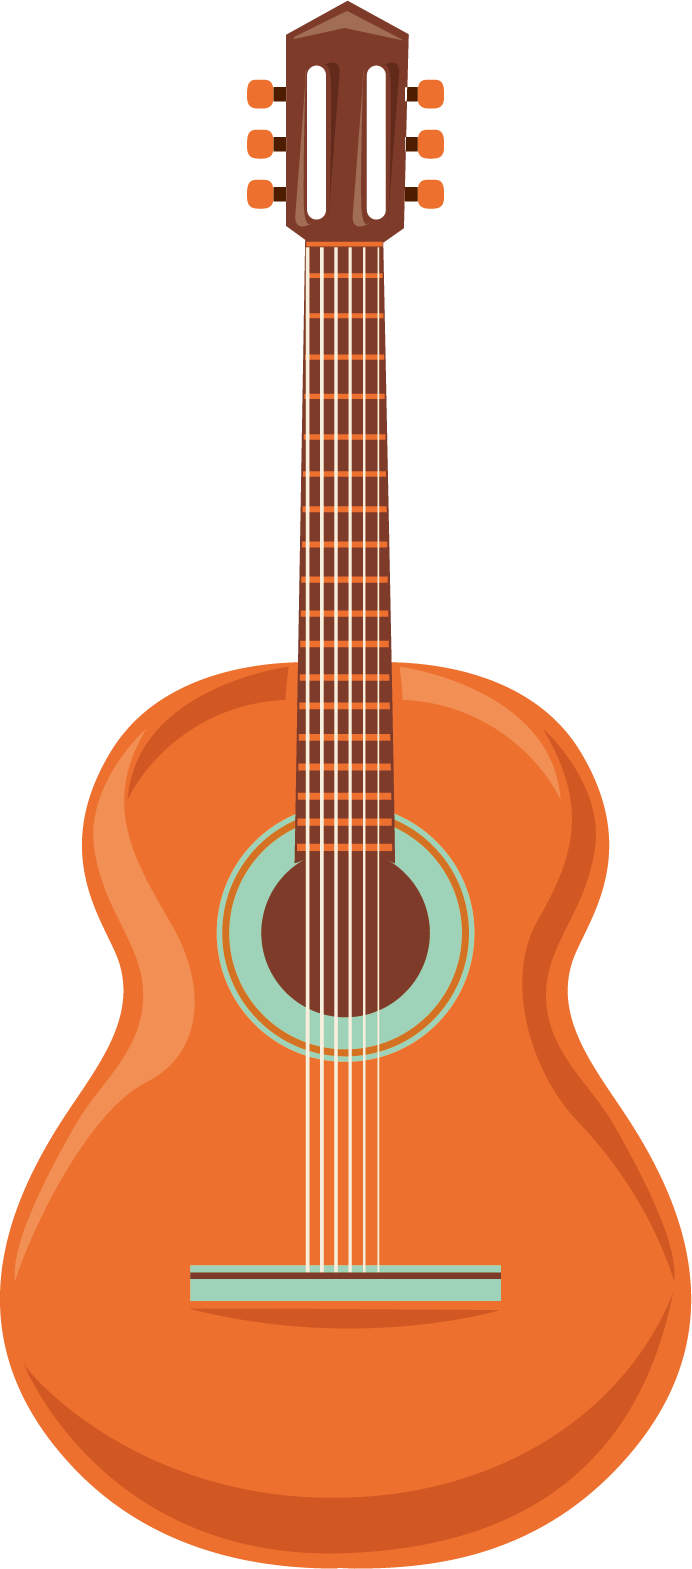 Tiple Ukulele Guitar Instrument Acoustic Cartoon Clipart